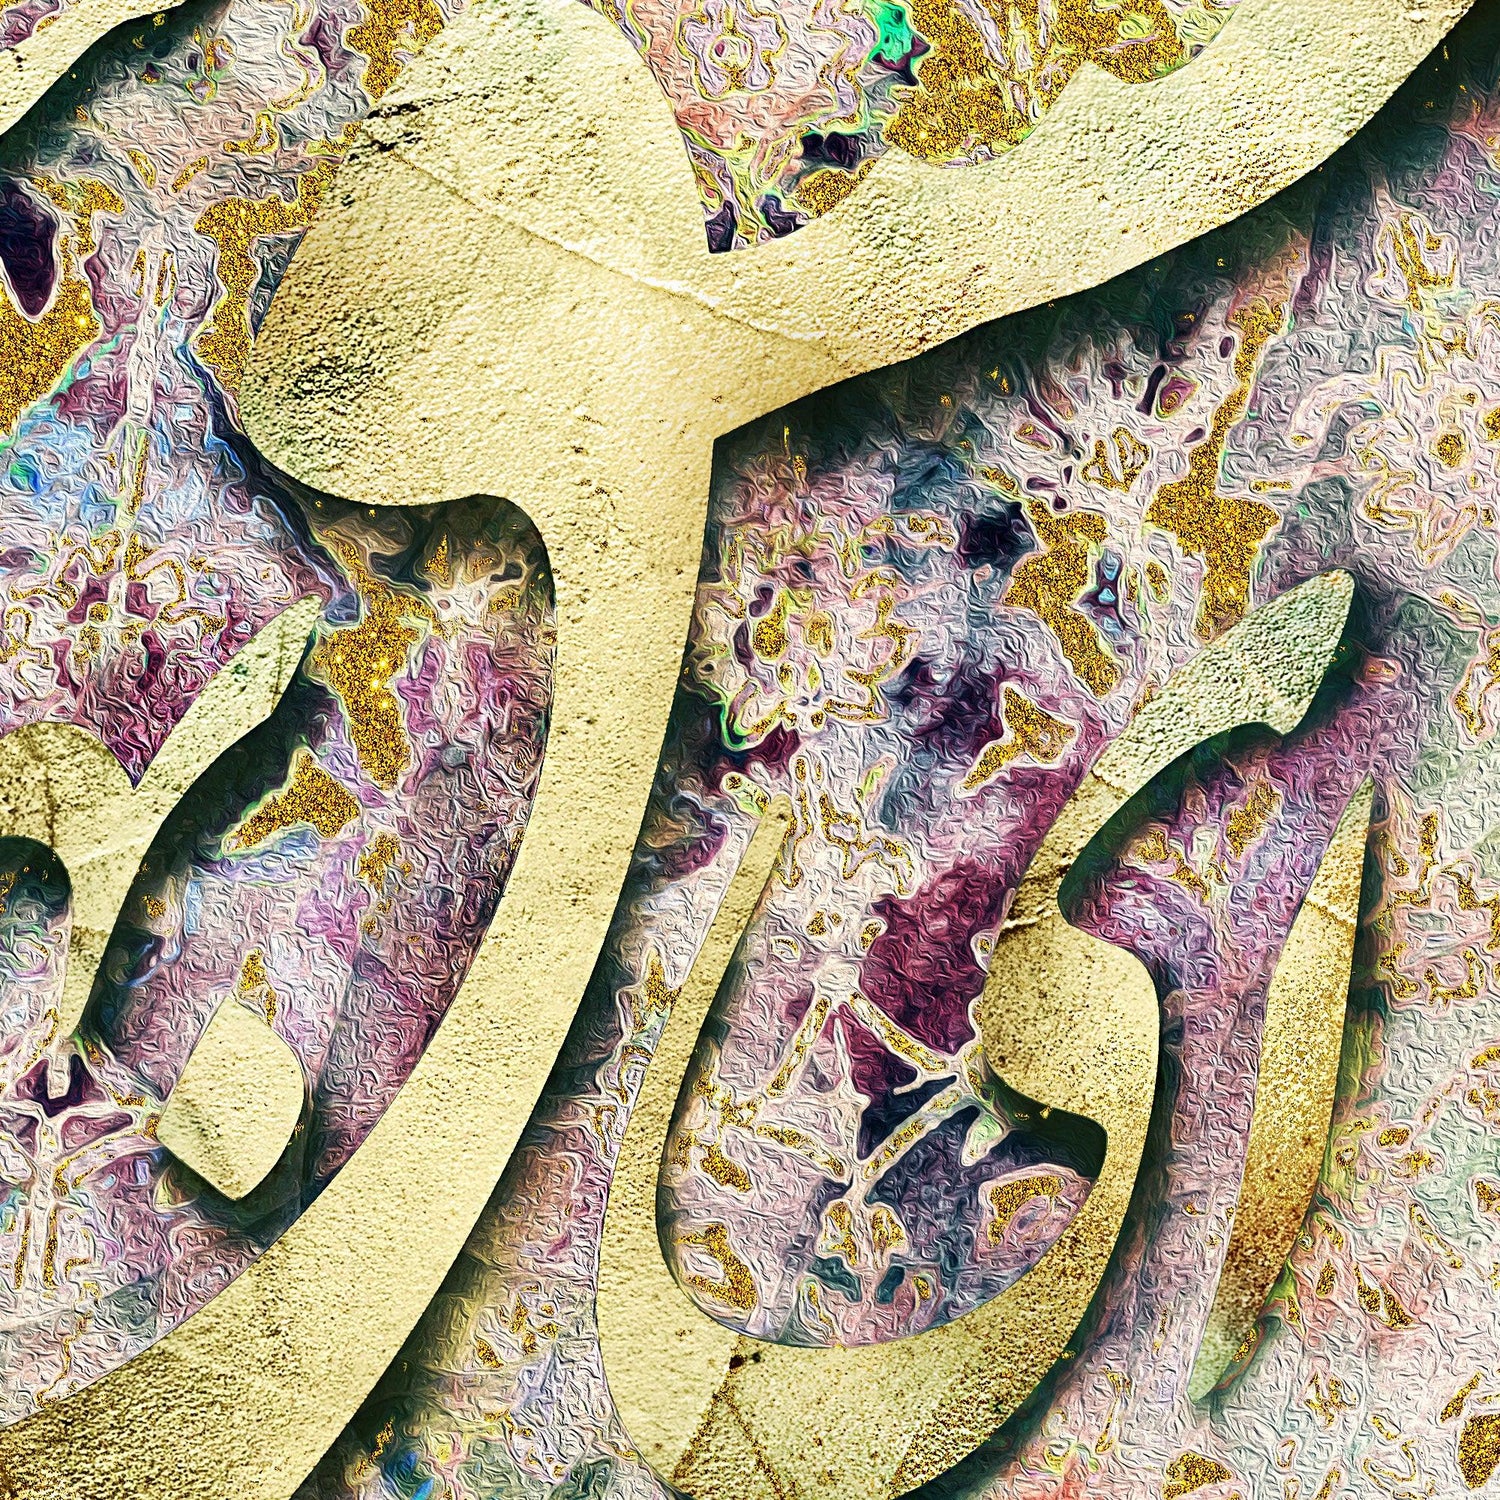 Ey Eshgh - 3 Piece | Persian Wall Art | Persian Home Wall Decor - ORIAVI Persian Art, persian artwork for sale, persian calligraphy, persian calligraphy wall art, persian mix media wall art, persian painting, persian wall art